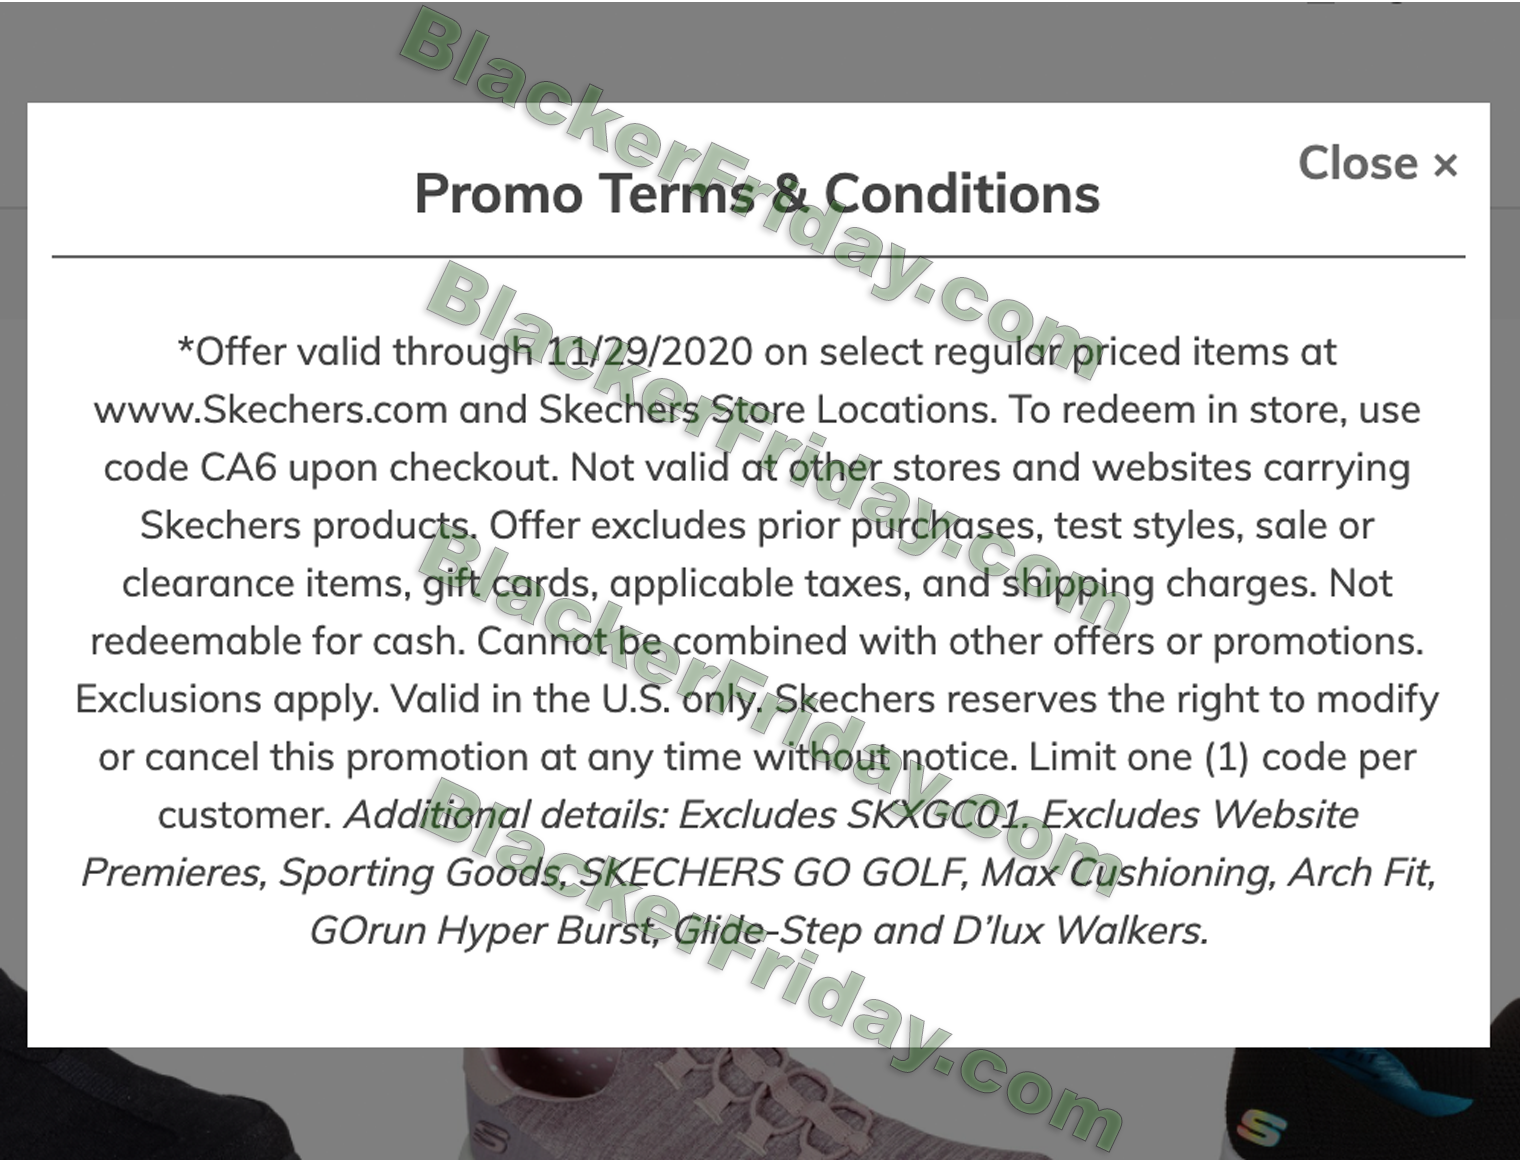 skechers black friday sale 2015